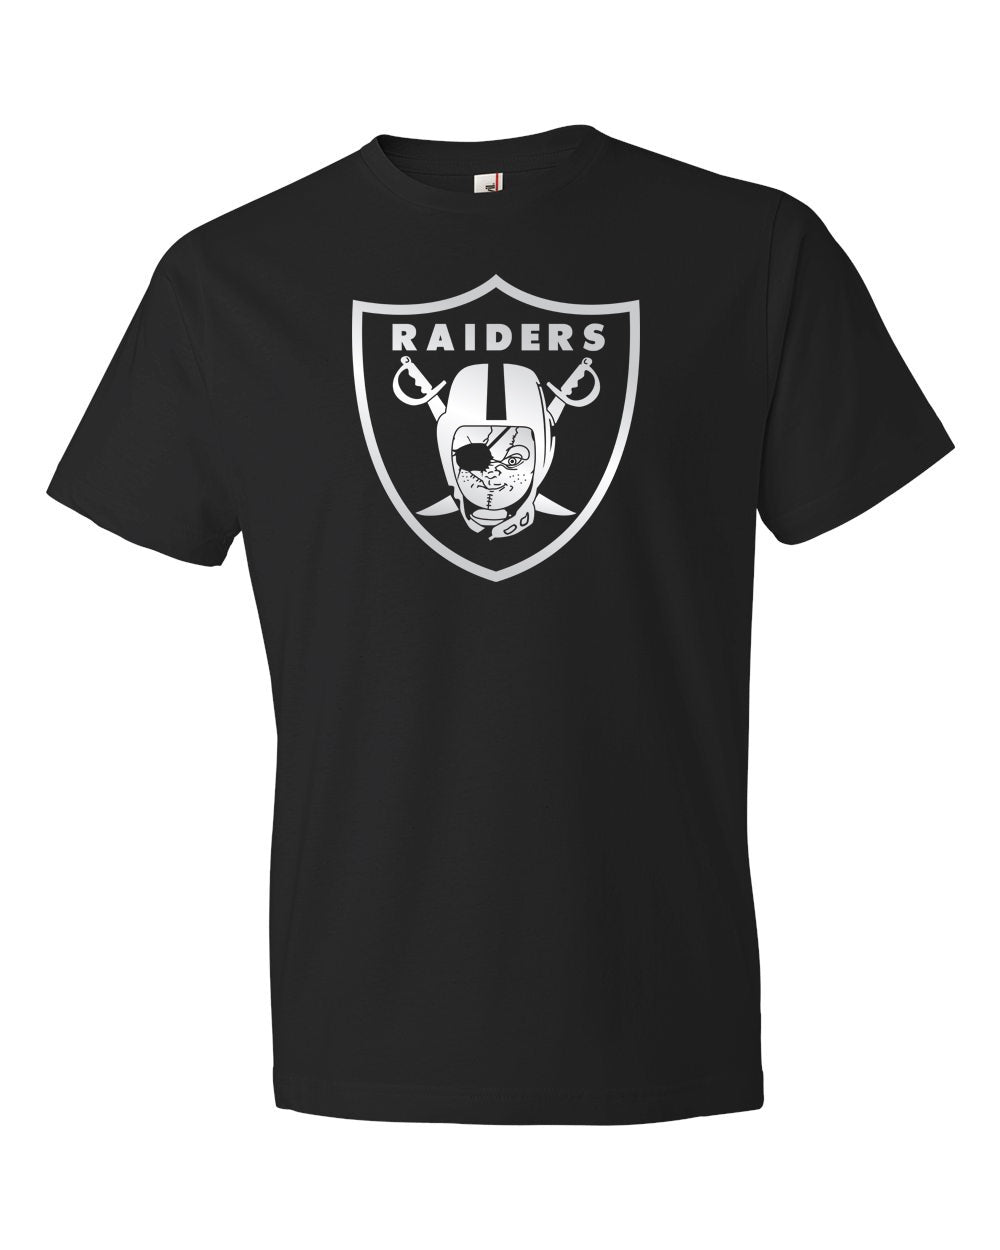 Oakland Raiders Jon Gruden Chucky LOGO Shirts 6 sizes S-3XL NFL